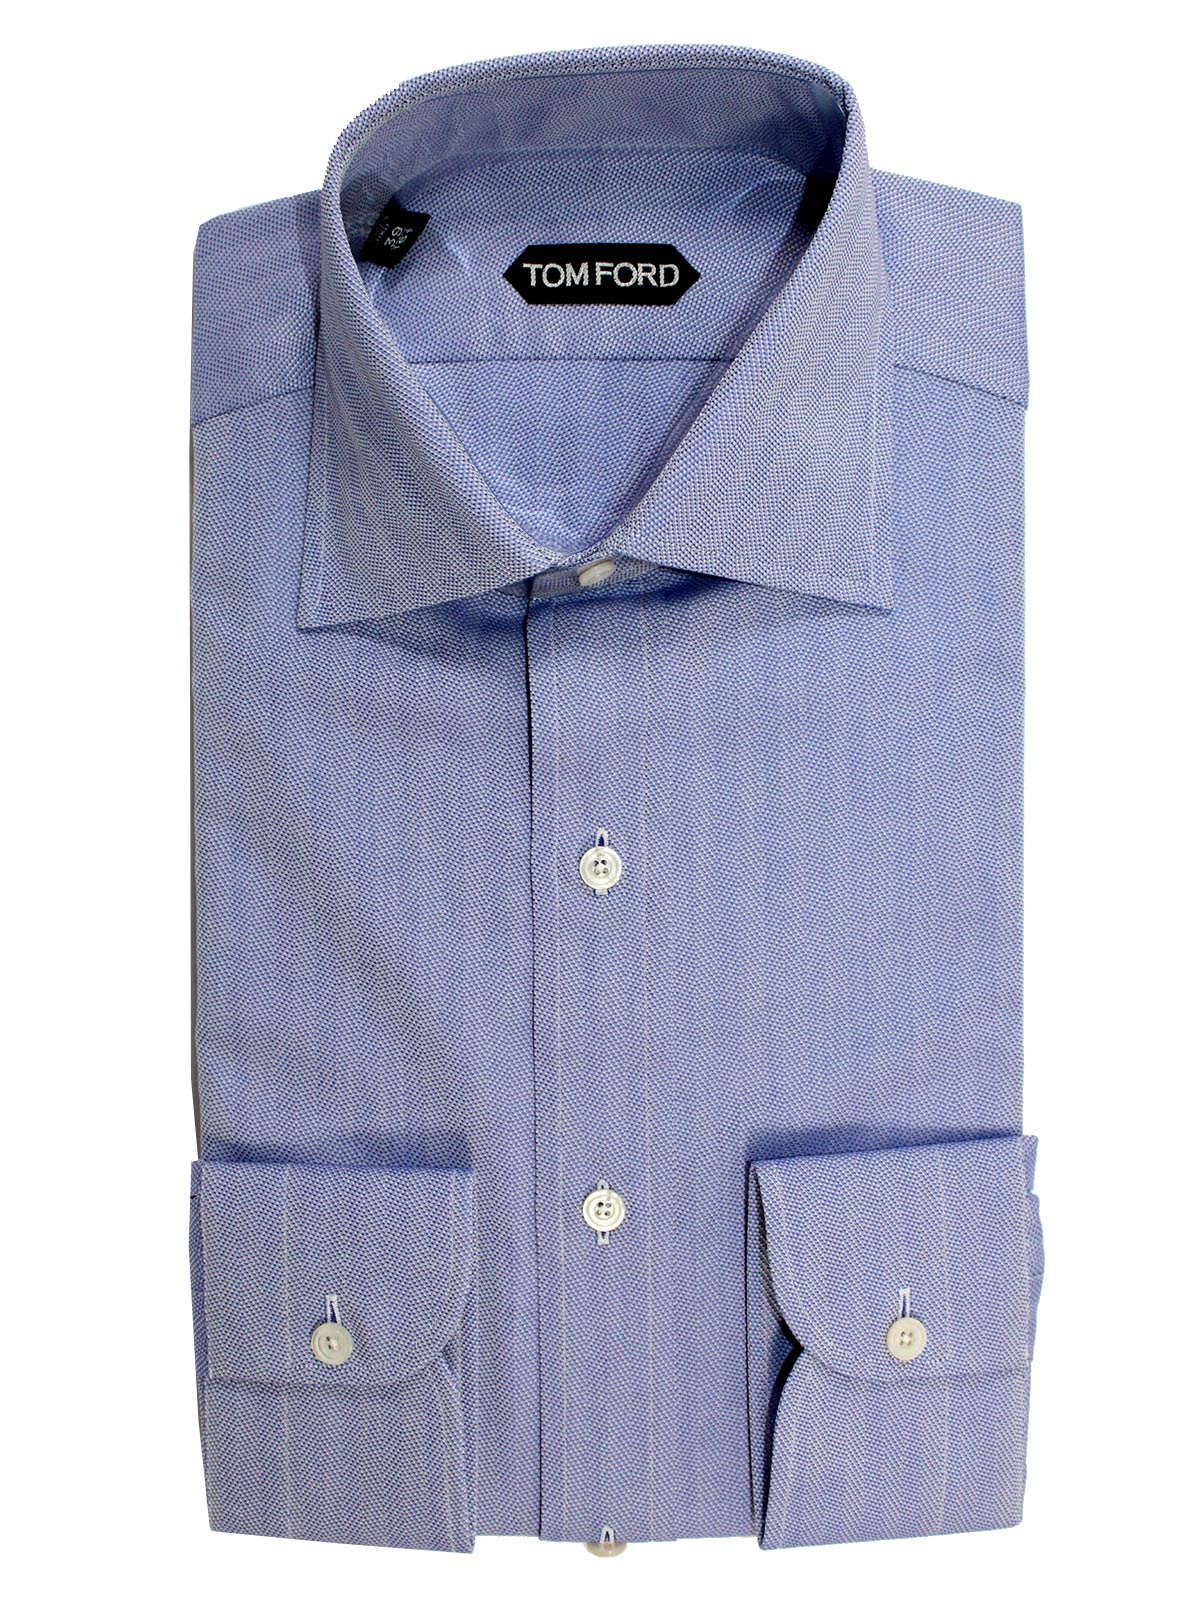 Tom Ford Shirt Lapis Blue Gray Design 39 - 15 1/2 Slim Fit SALE